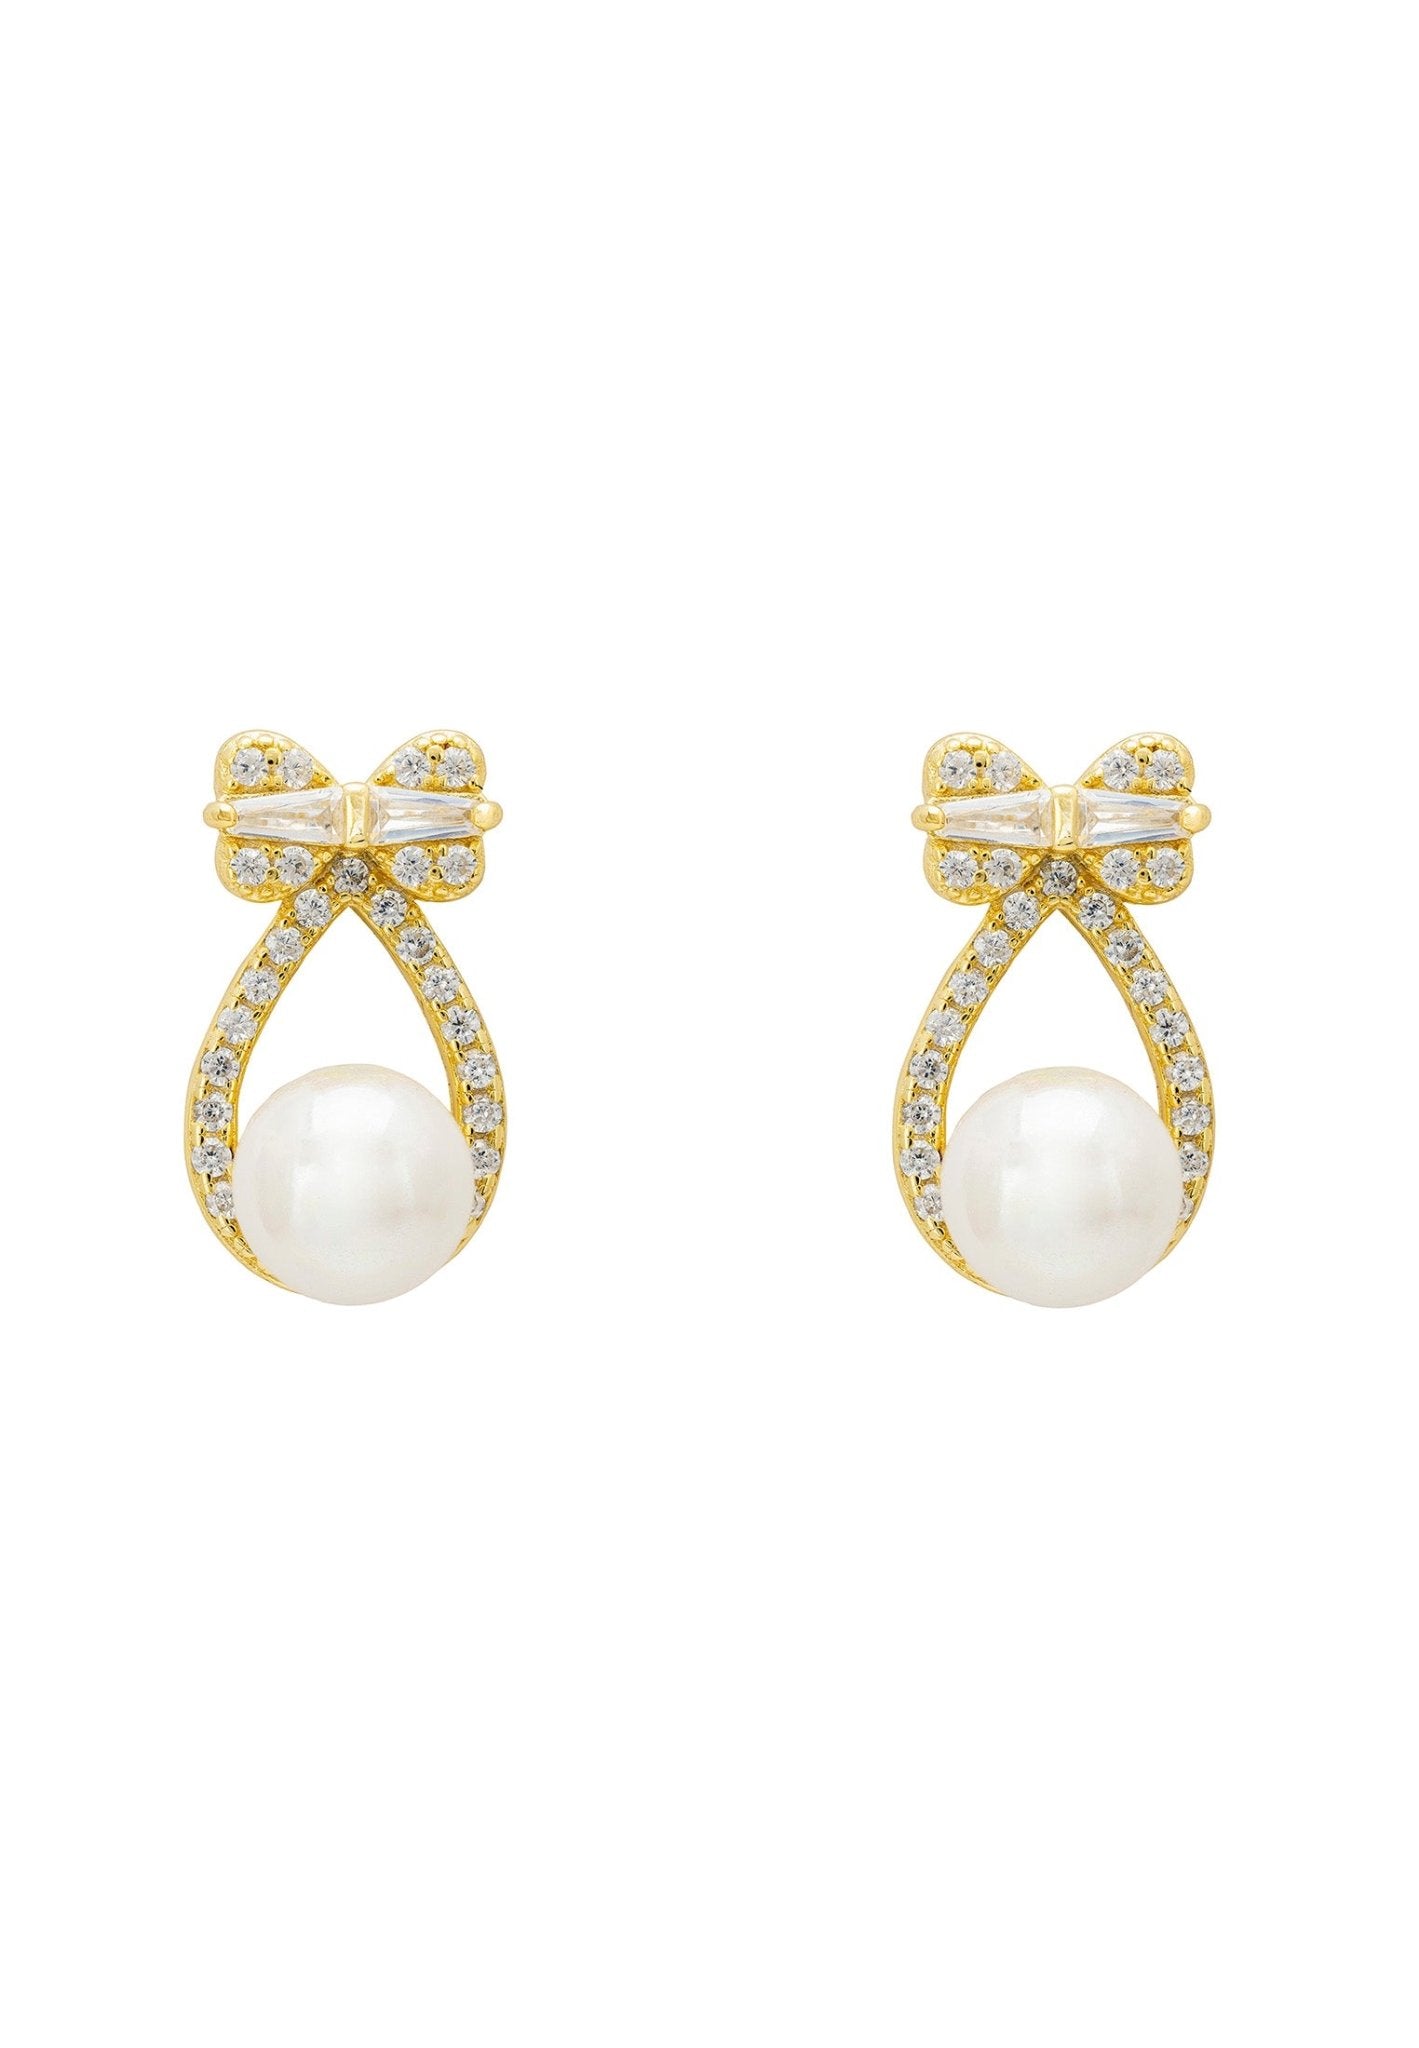 Bows And Pearls Earrings Gold - LATELITA Earrings